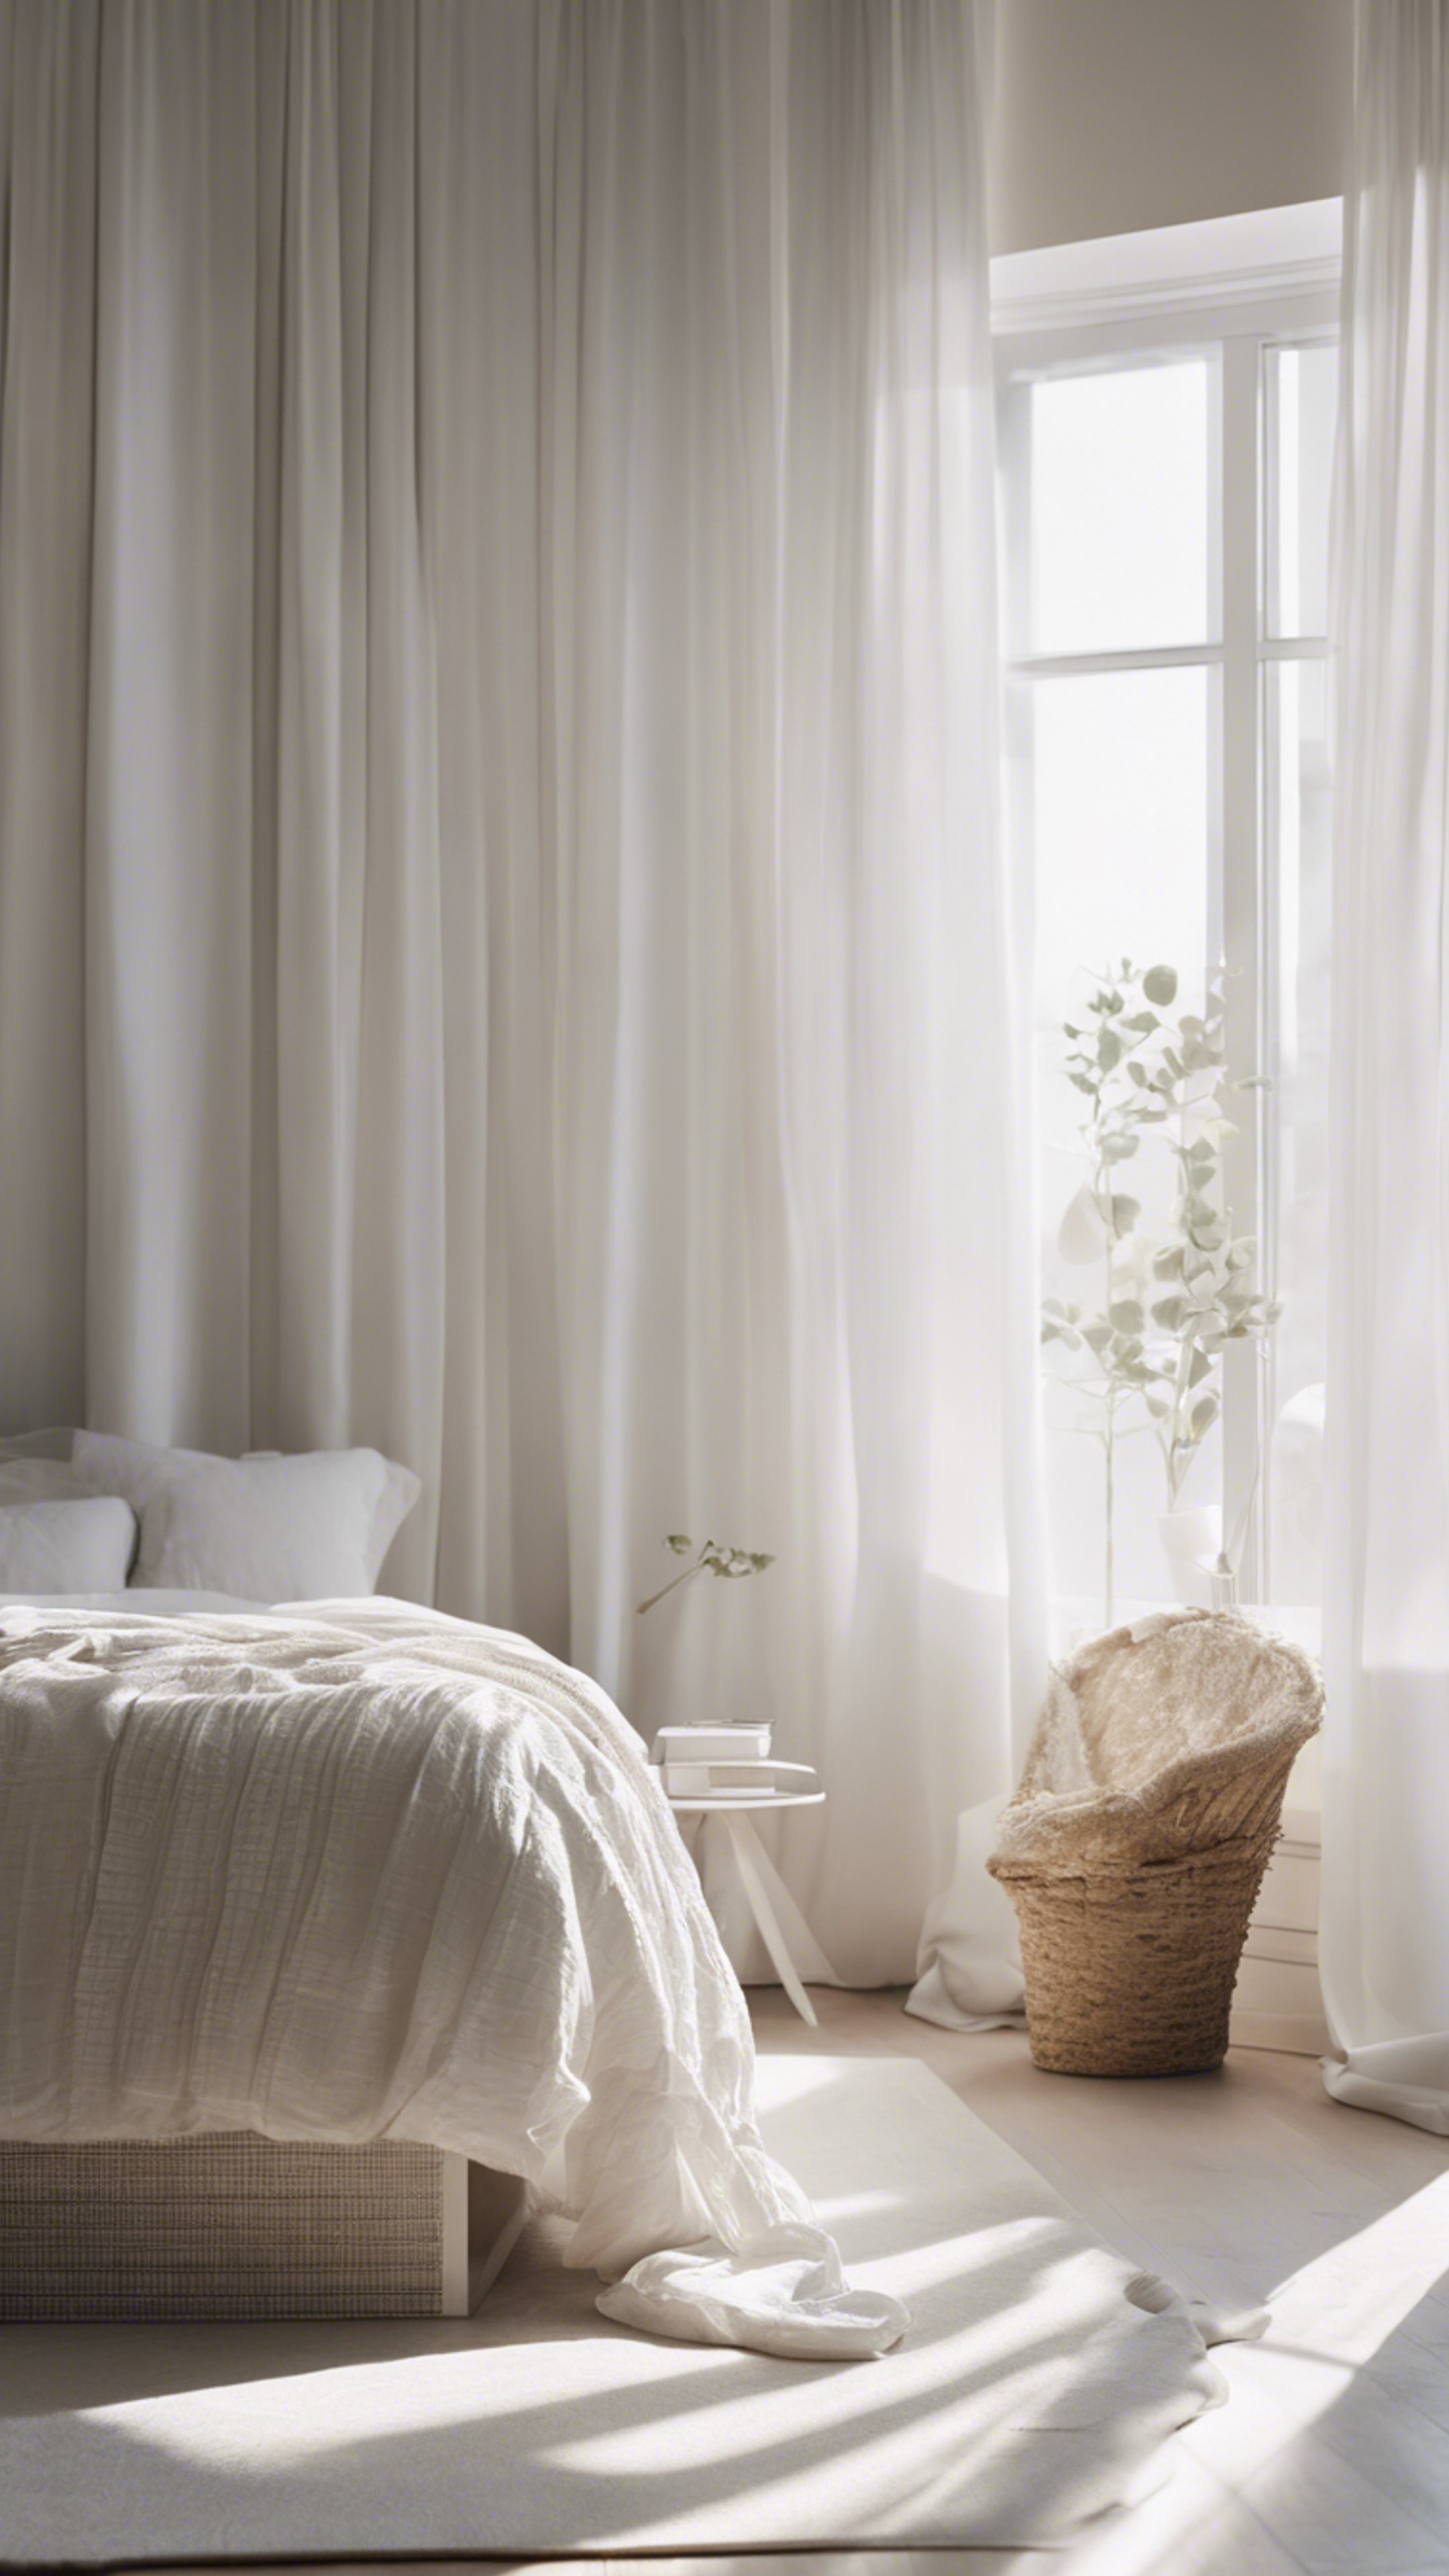 A serene white bedroom with a minimalist aesthetic, sunlight streaming through sheer curtains Taustakuva[e50a9fa27884450ea562]